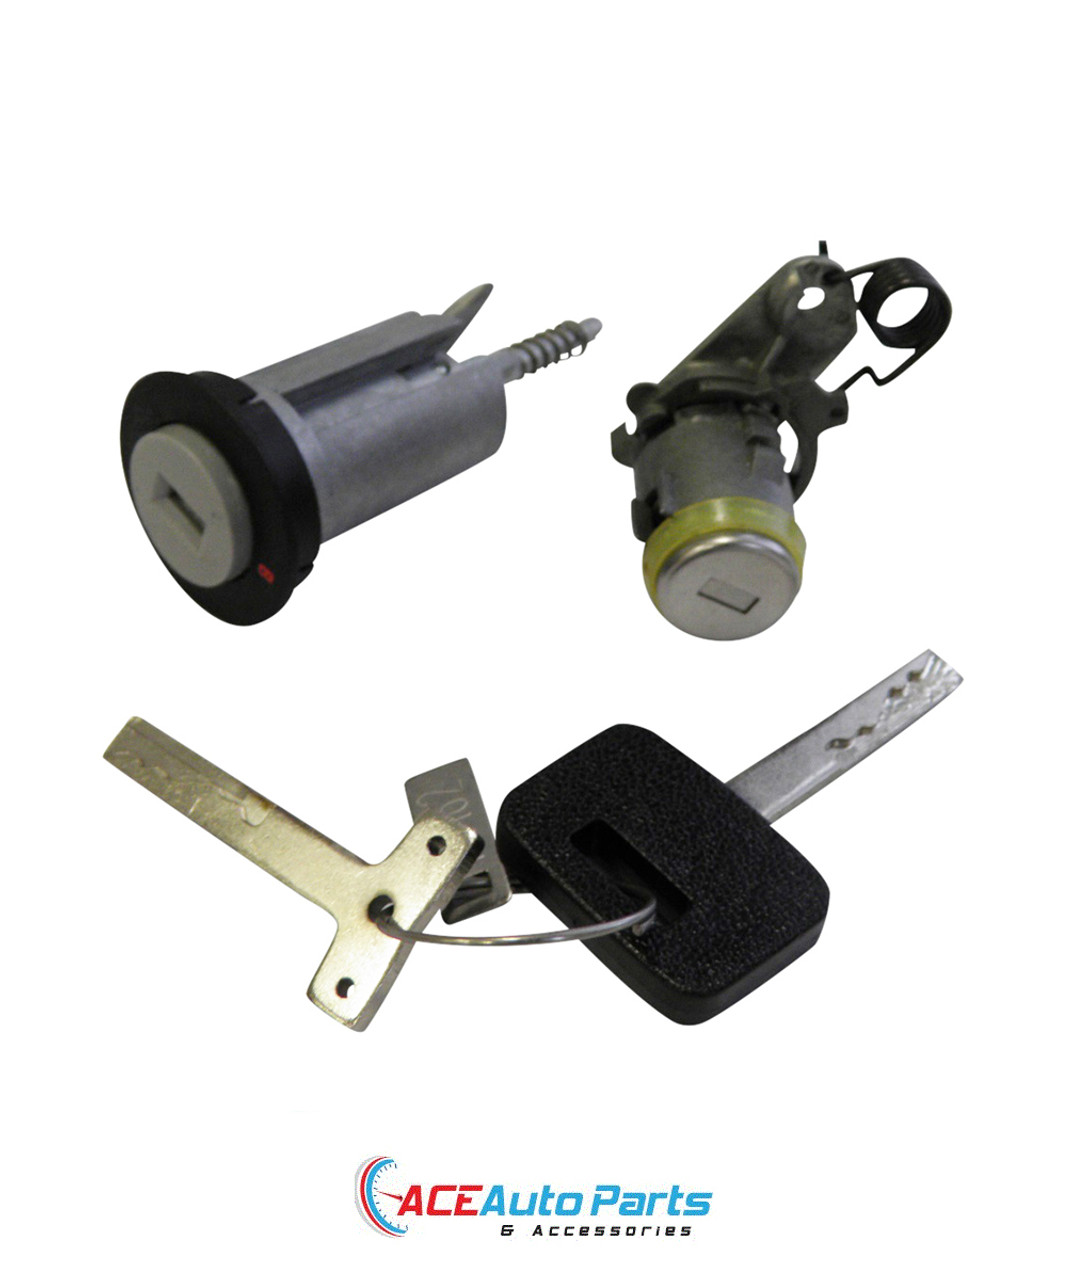 Ignition Barrel + Door Lock Set For Holden Commodore VS Sedan+Wagon+Ute